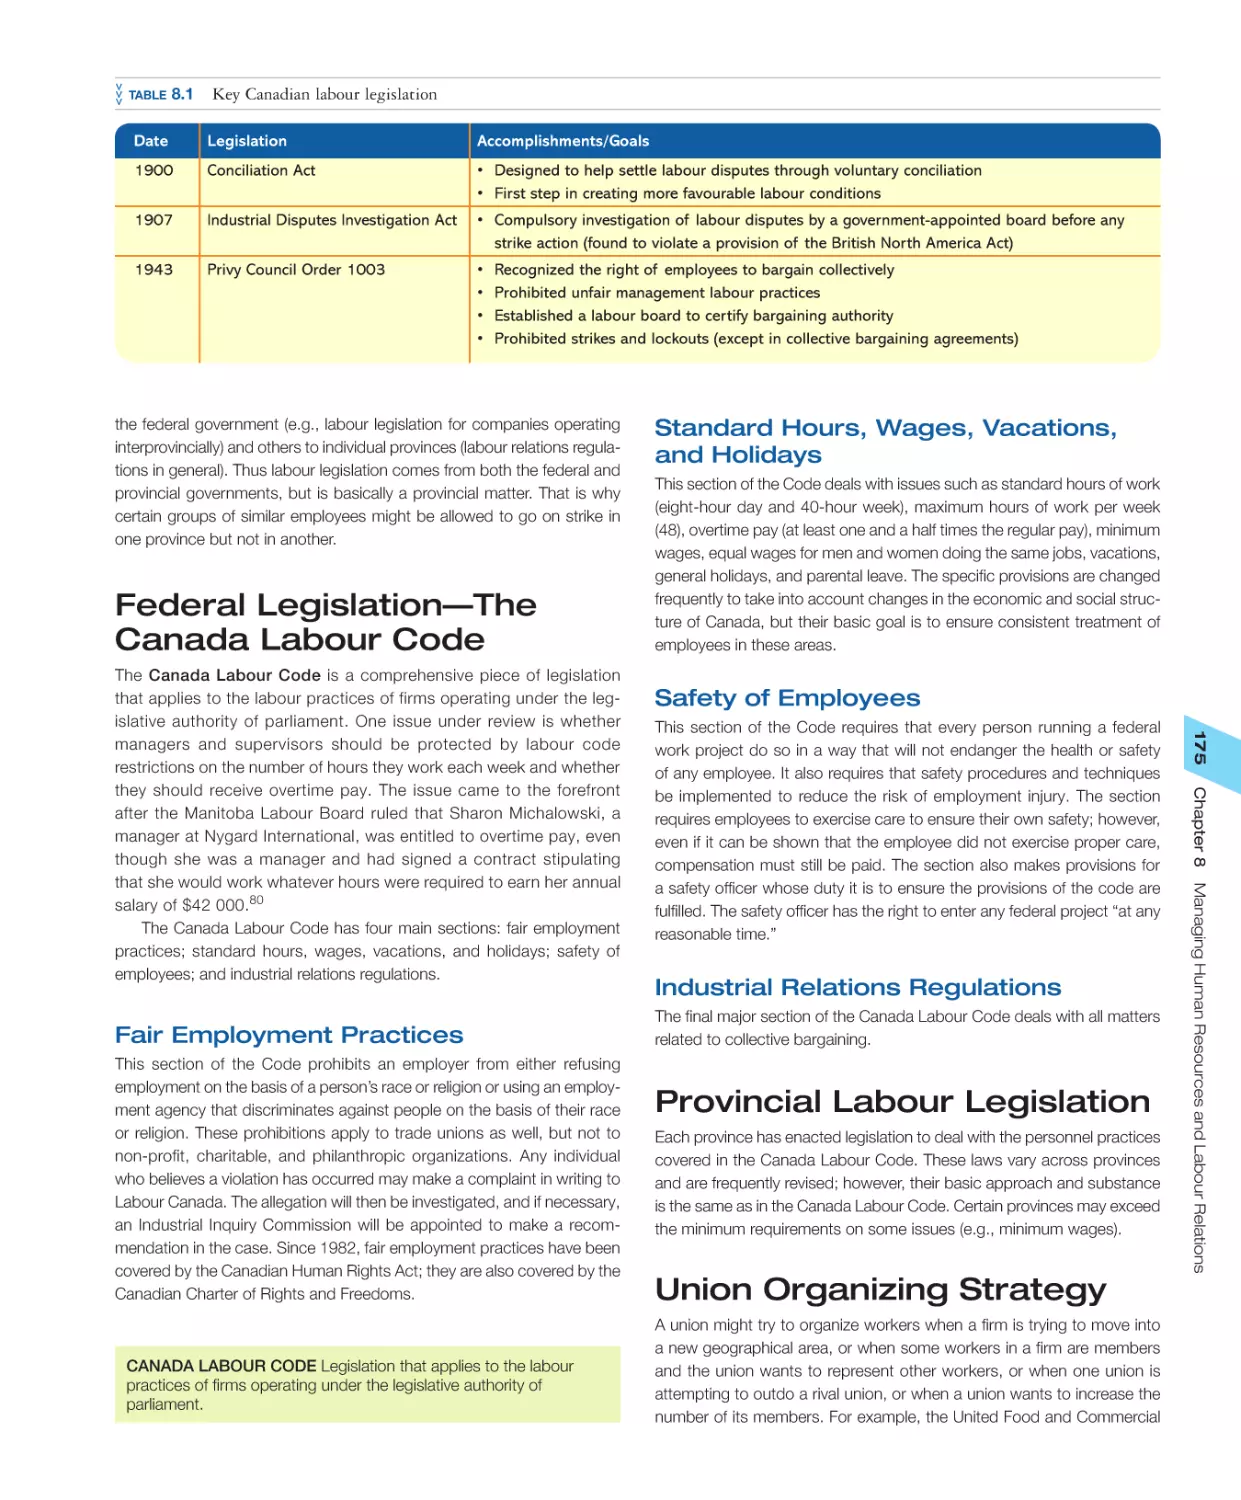 Provincial Labour Legislation
Union Organizing Strategy